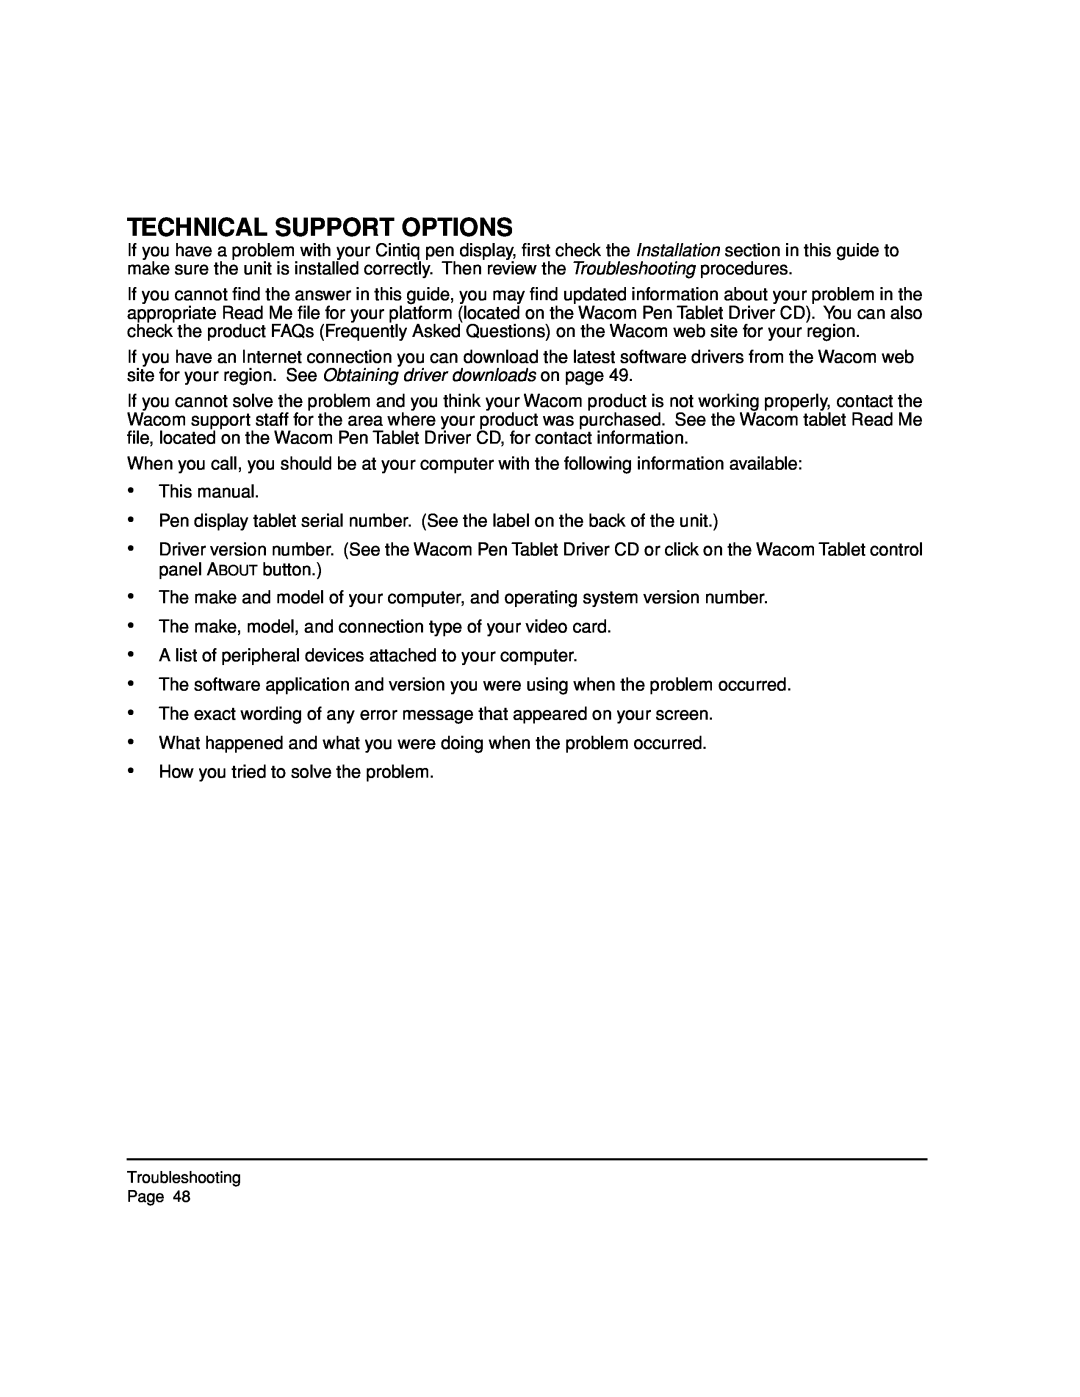 Wacom 12WX, DTZ-1200W manual Technical Support Options 